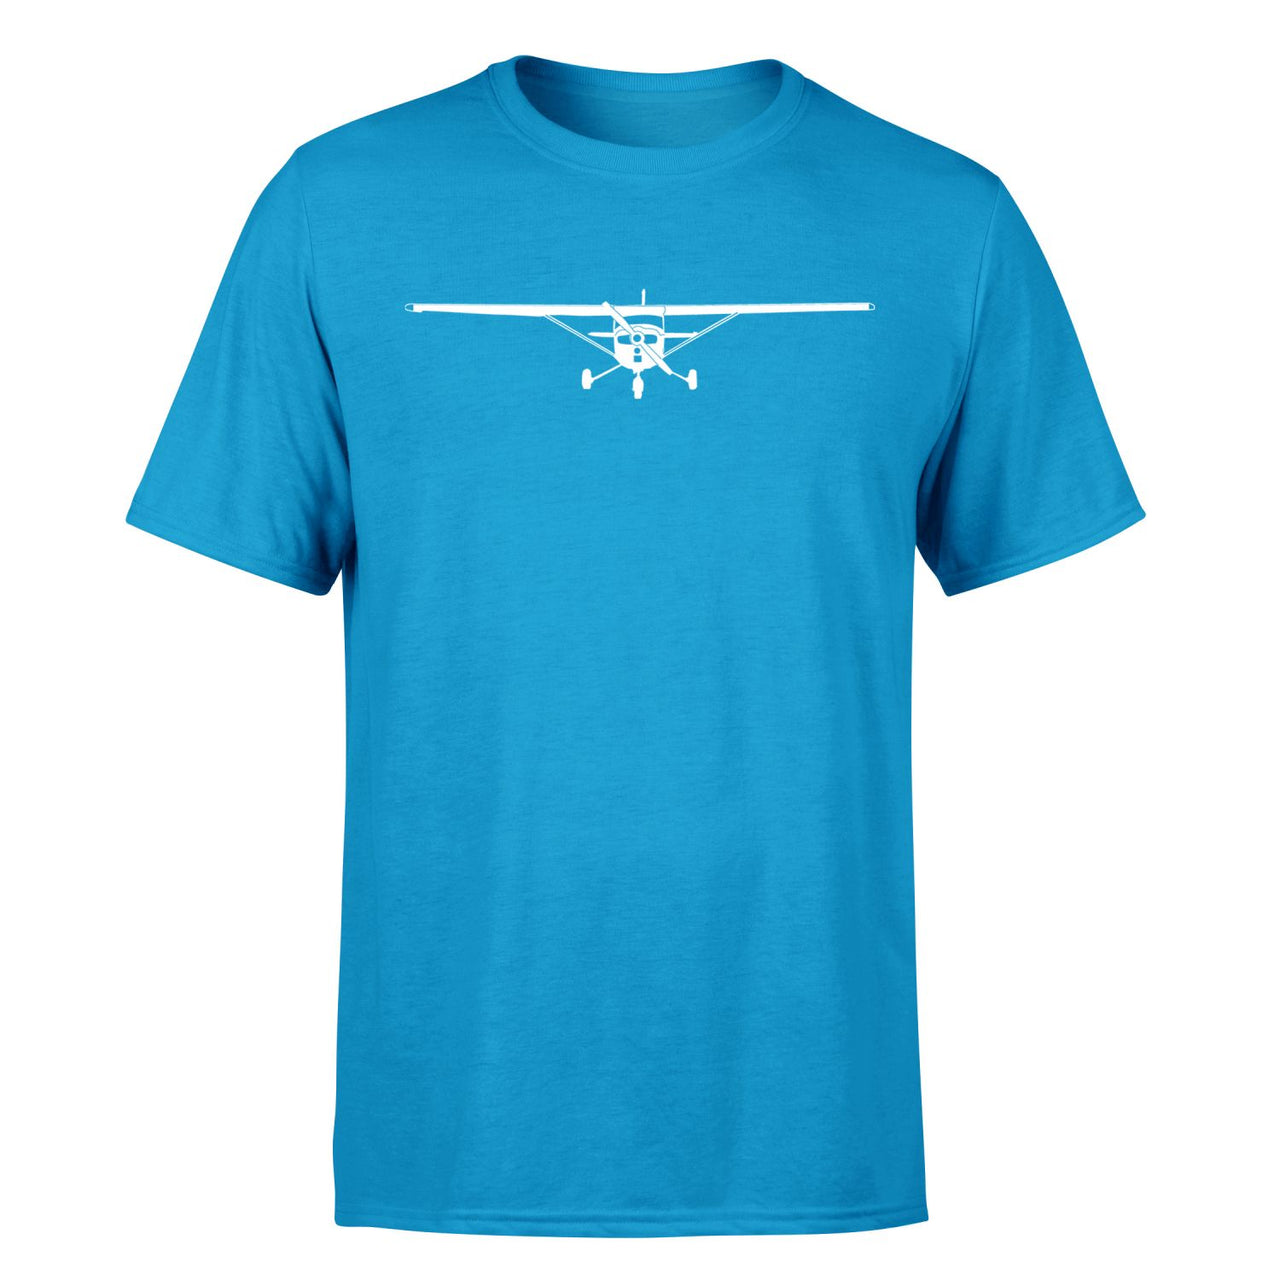 Cessna 172 Silhouette Designed T-Shirts